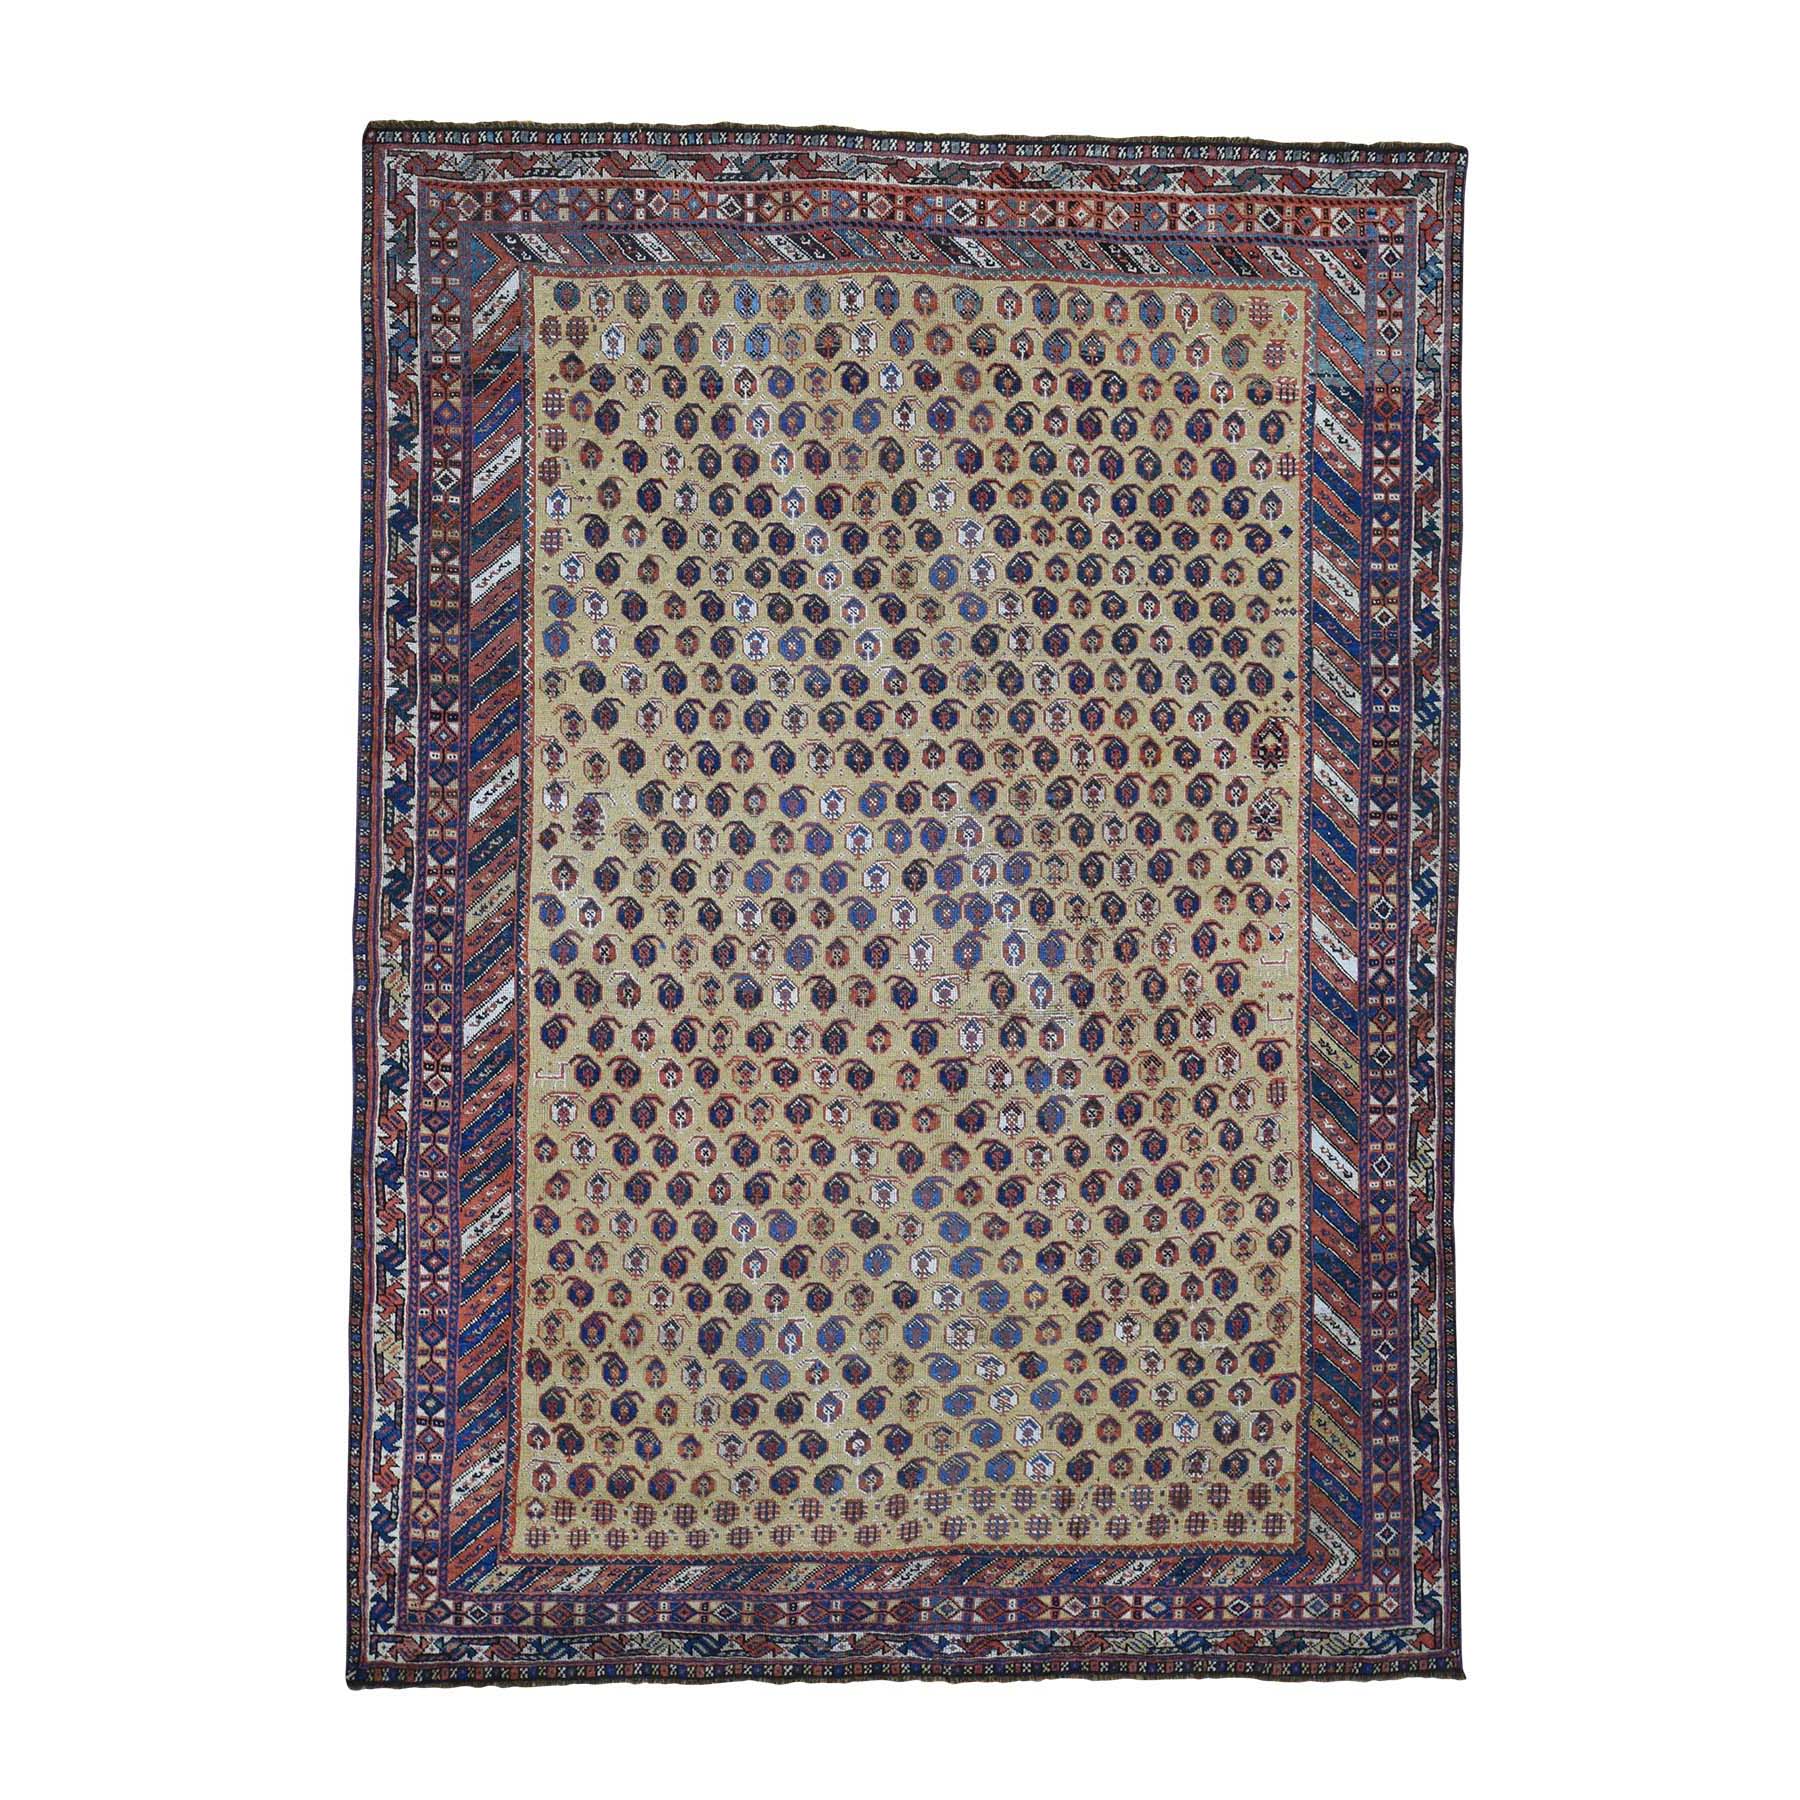 5'9"x7'10" Antique Persian Afshar Even Wear Good Condition Hand Woven Oriental Rug 